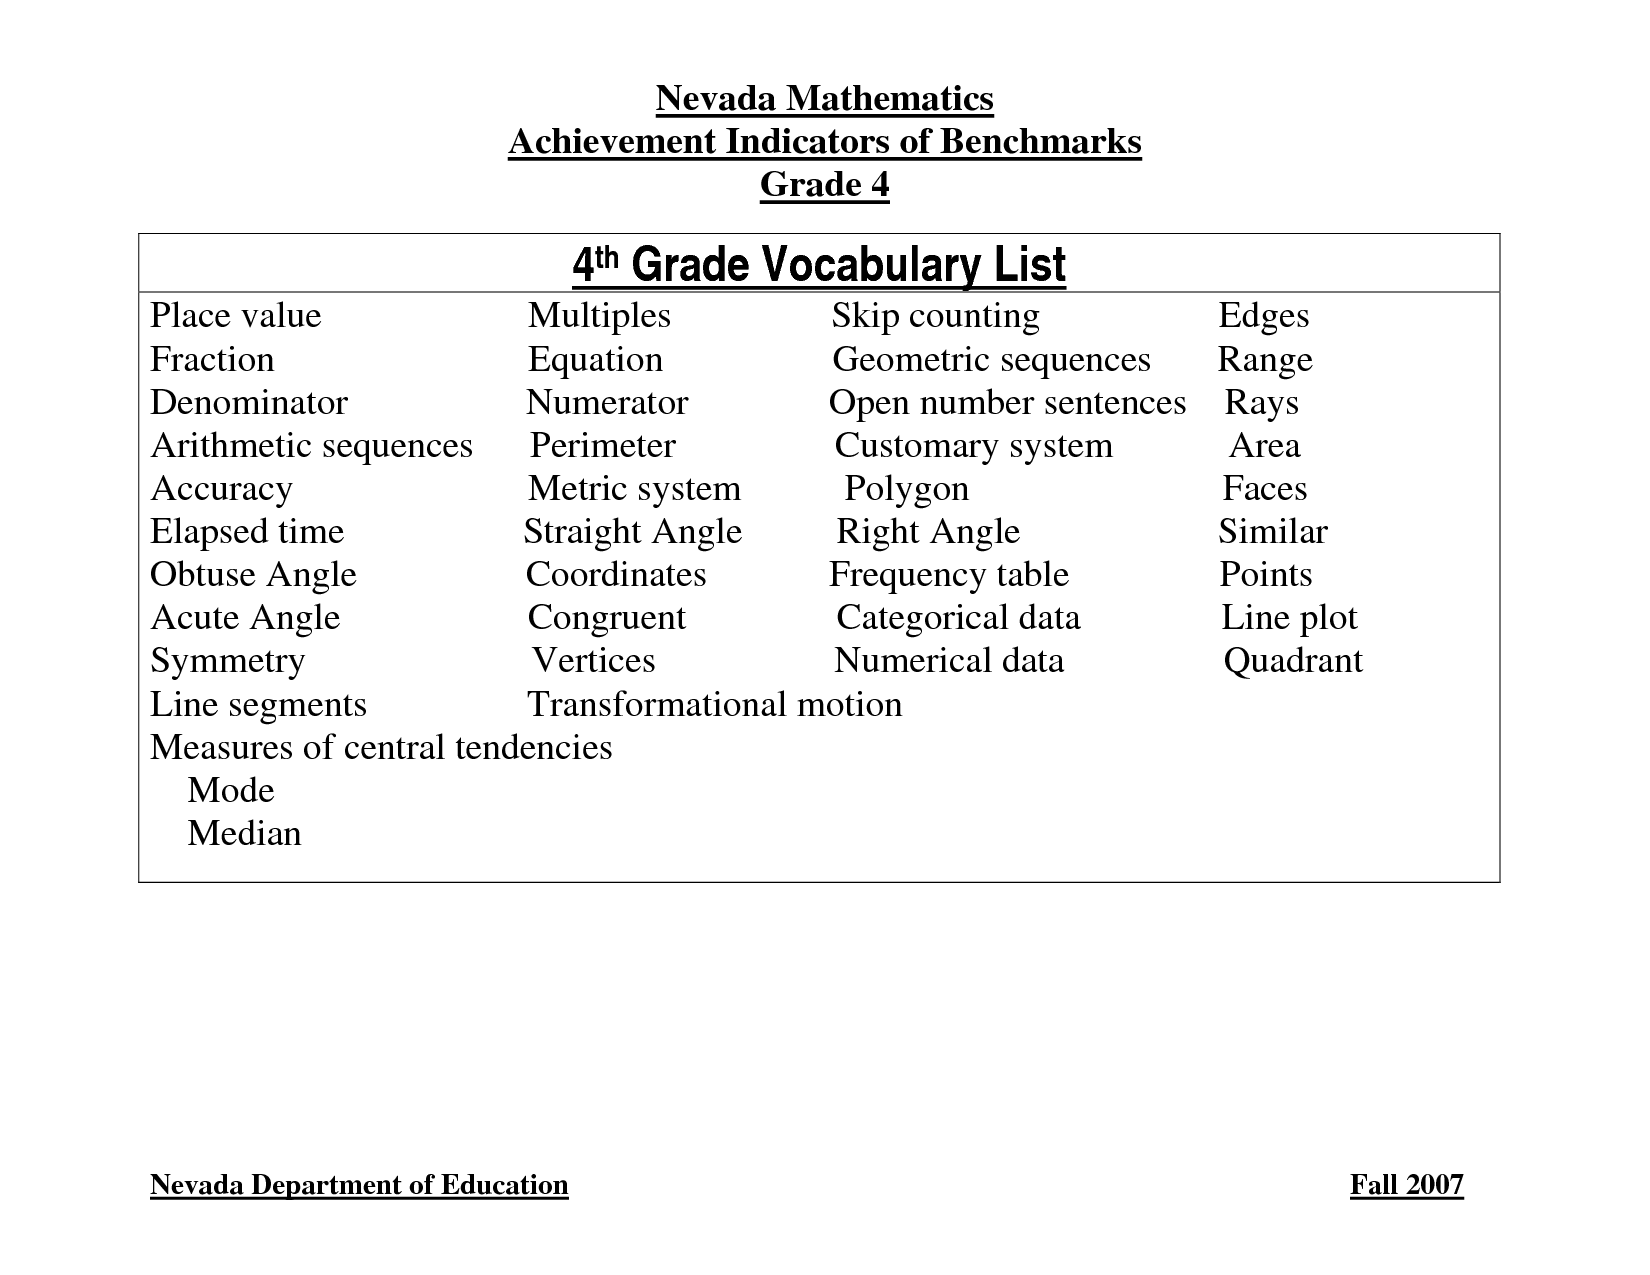 4th Grade Vocabulary Words Image